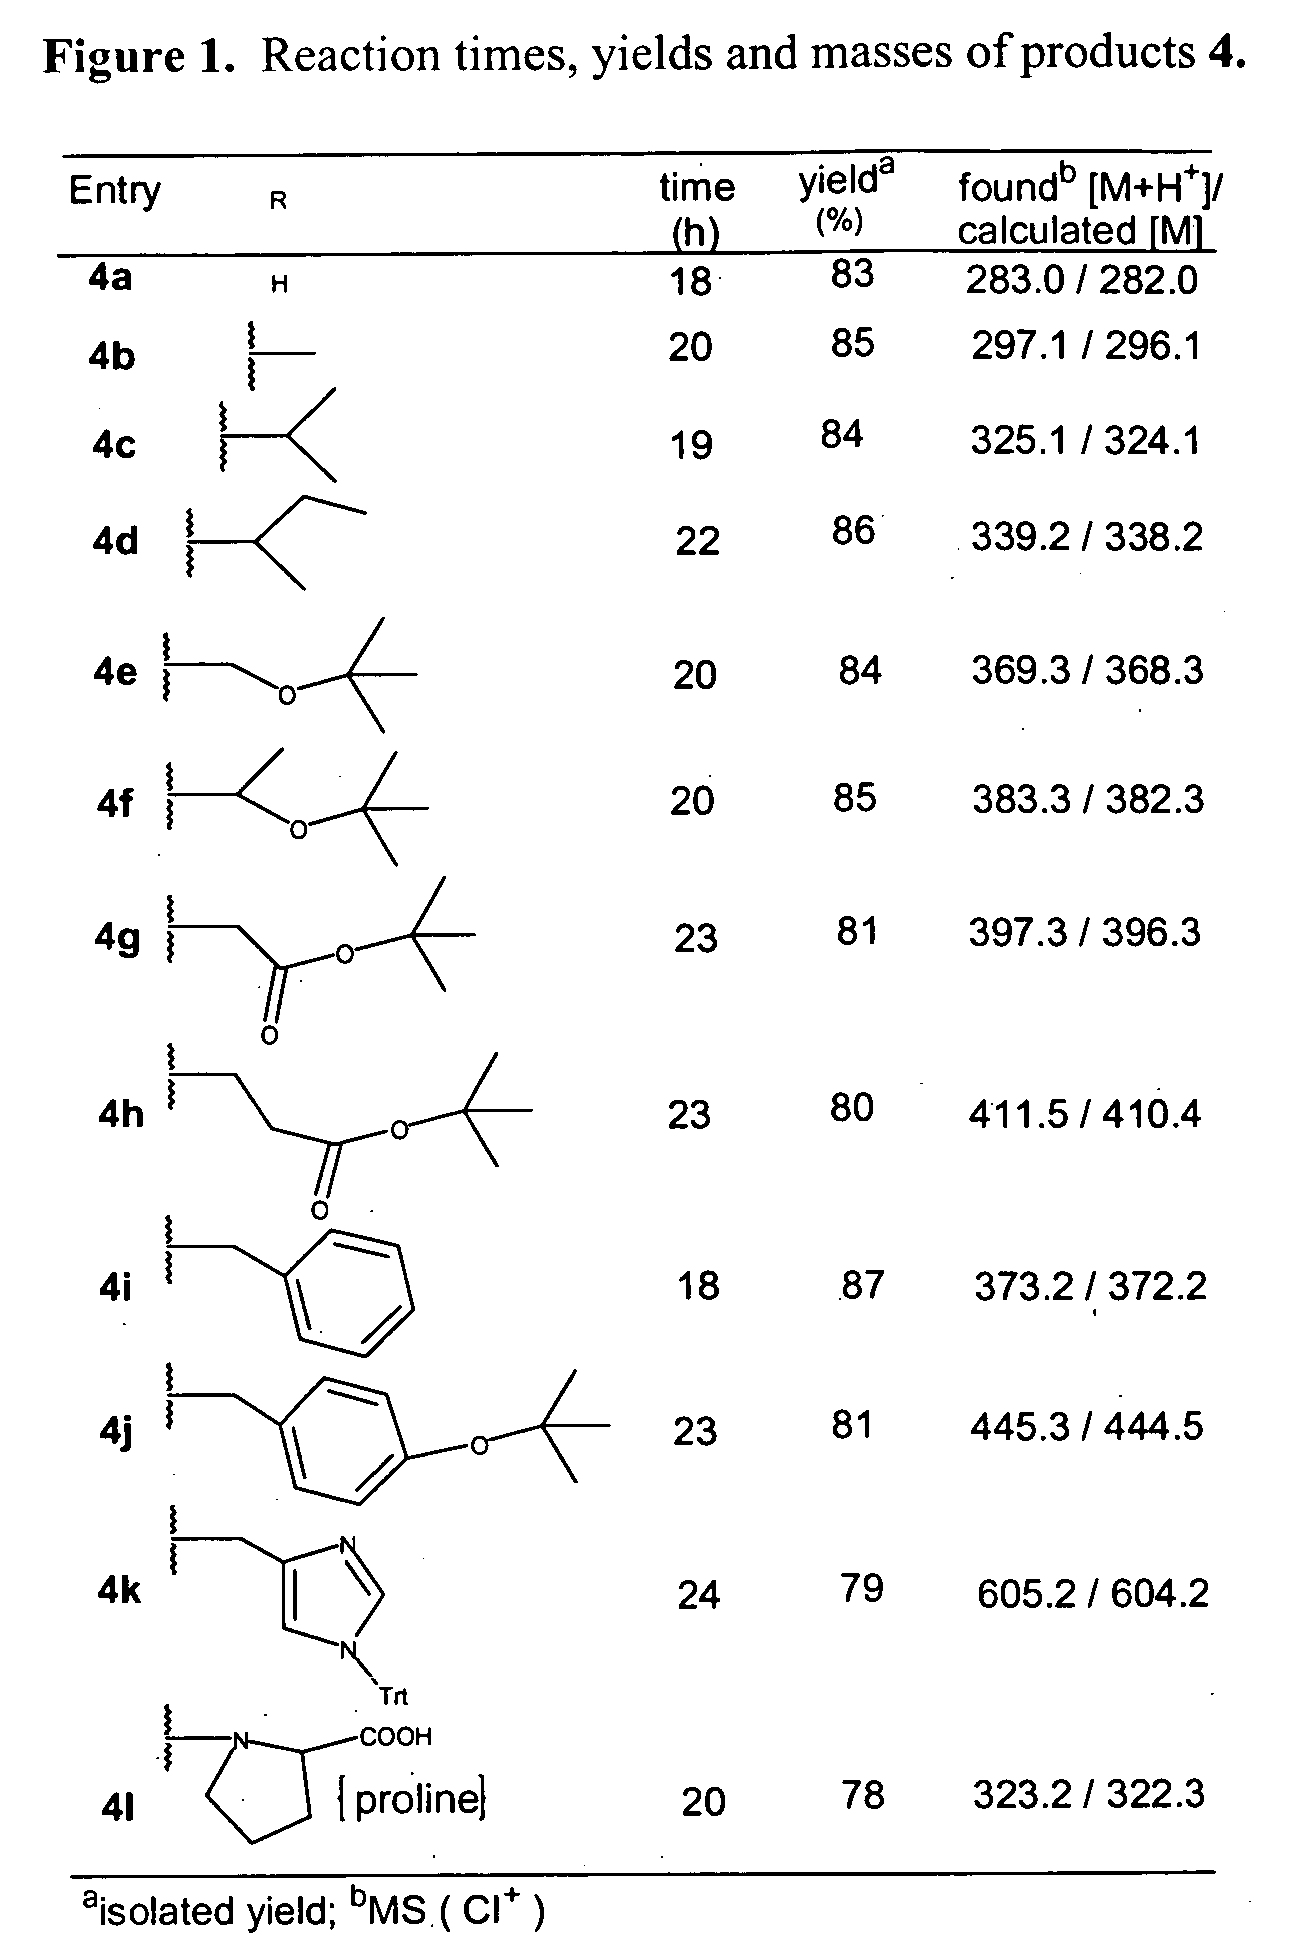 Synthesis of photolabile 2-(2-nitrophenyl)propyloxycarbonyl protected amino acids